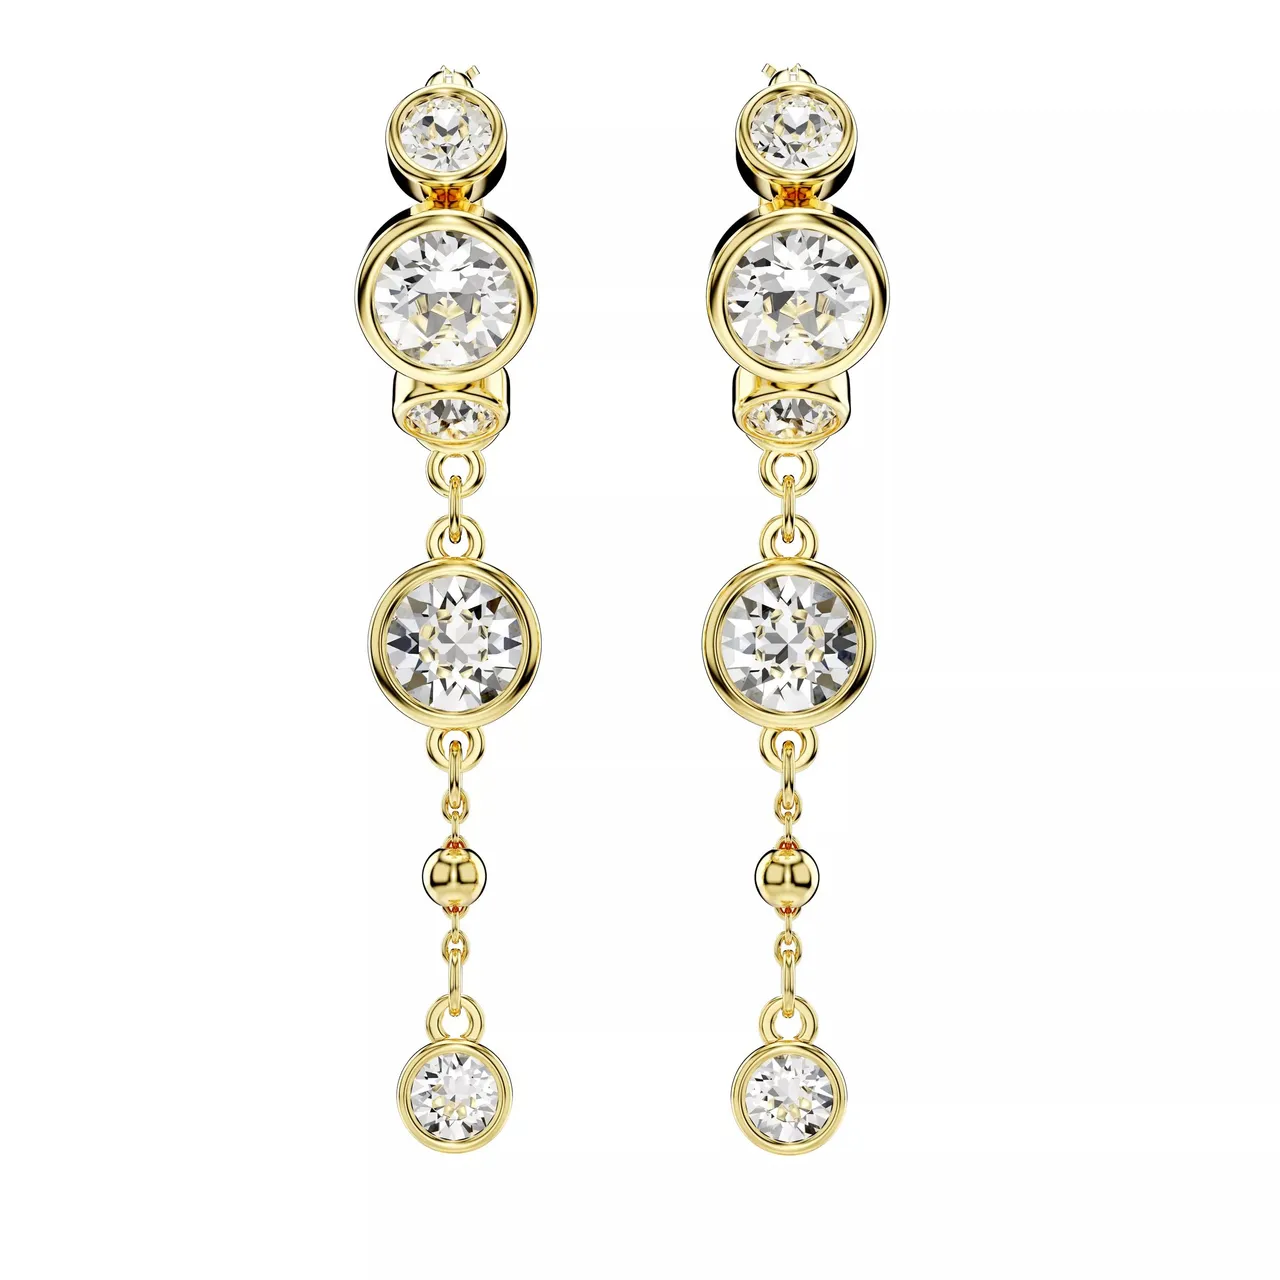 Swarovski Earrings - Imber drop earrings, Round cut, Mixed metal finish - white - Earrings for ladies